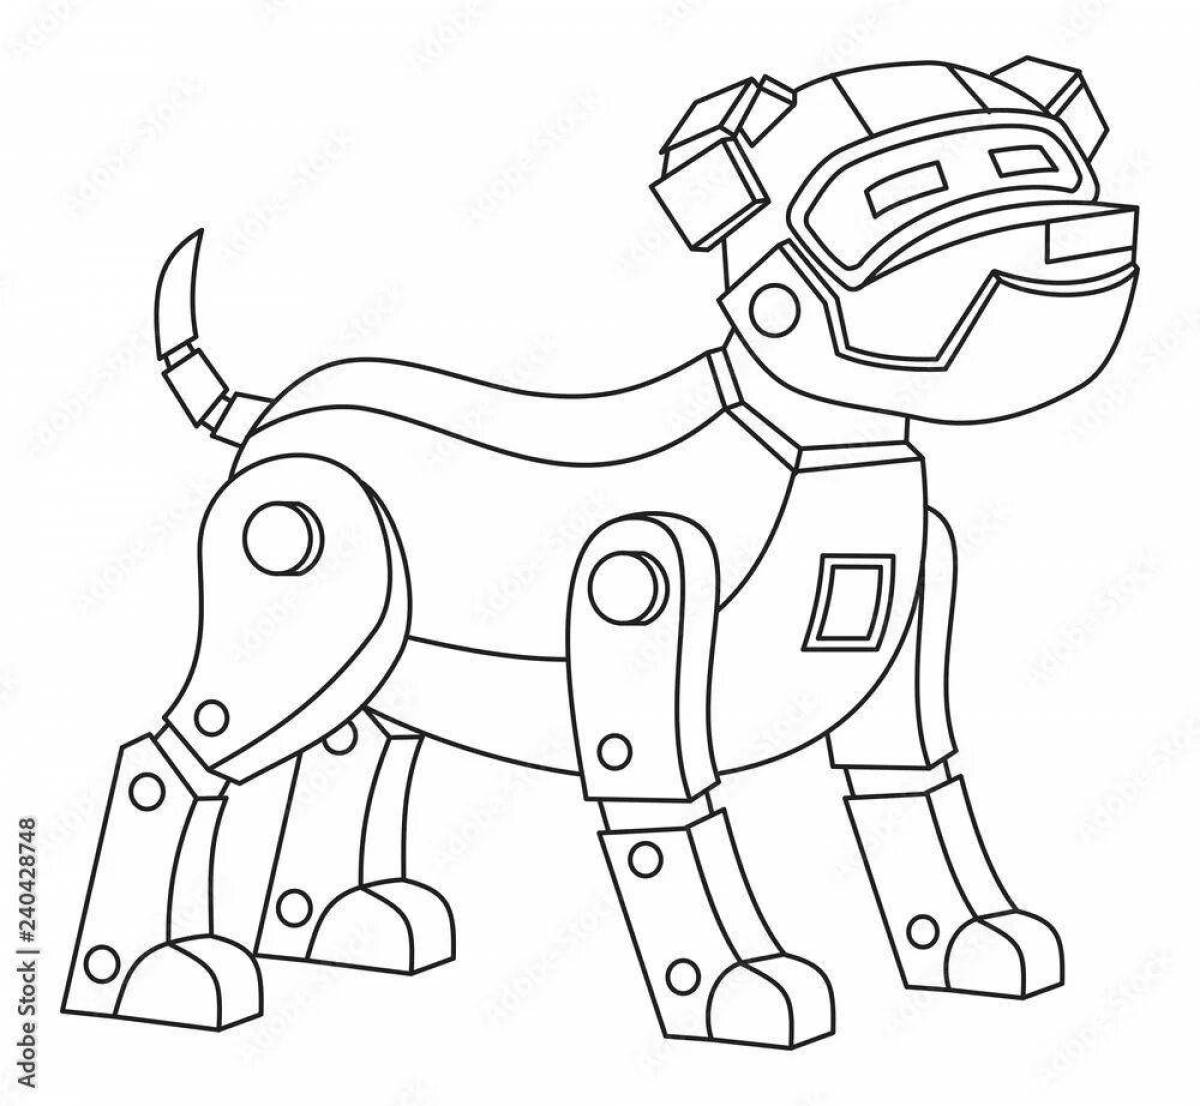 Robot dog #20